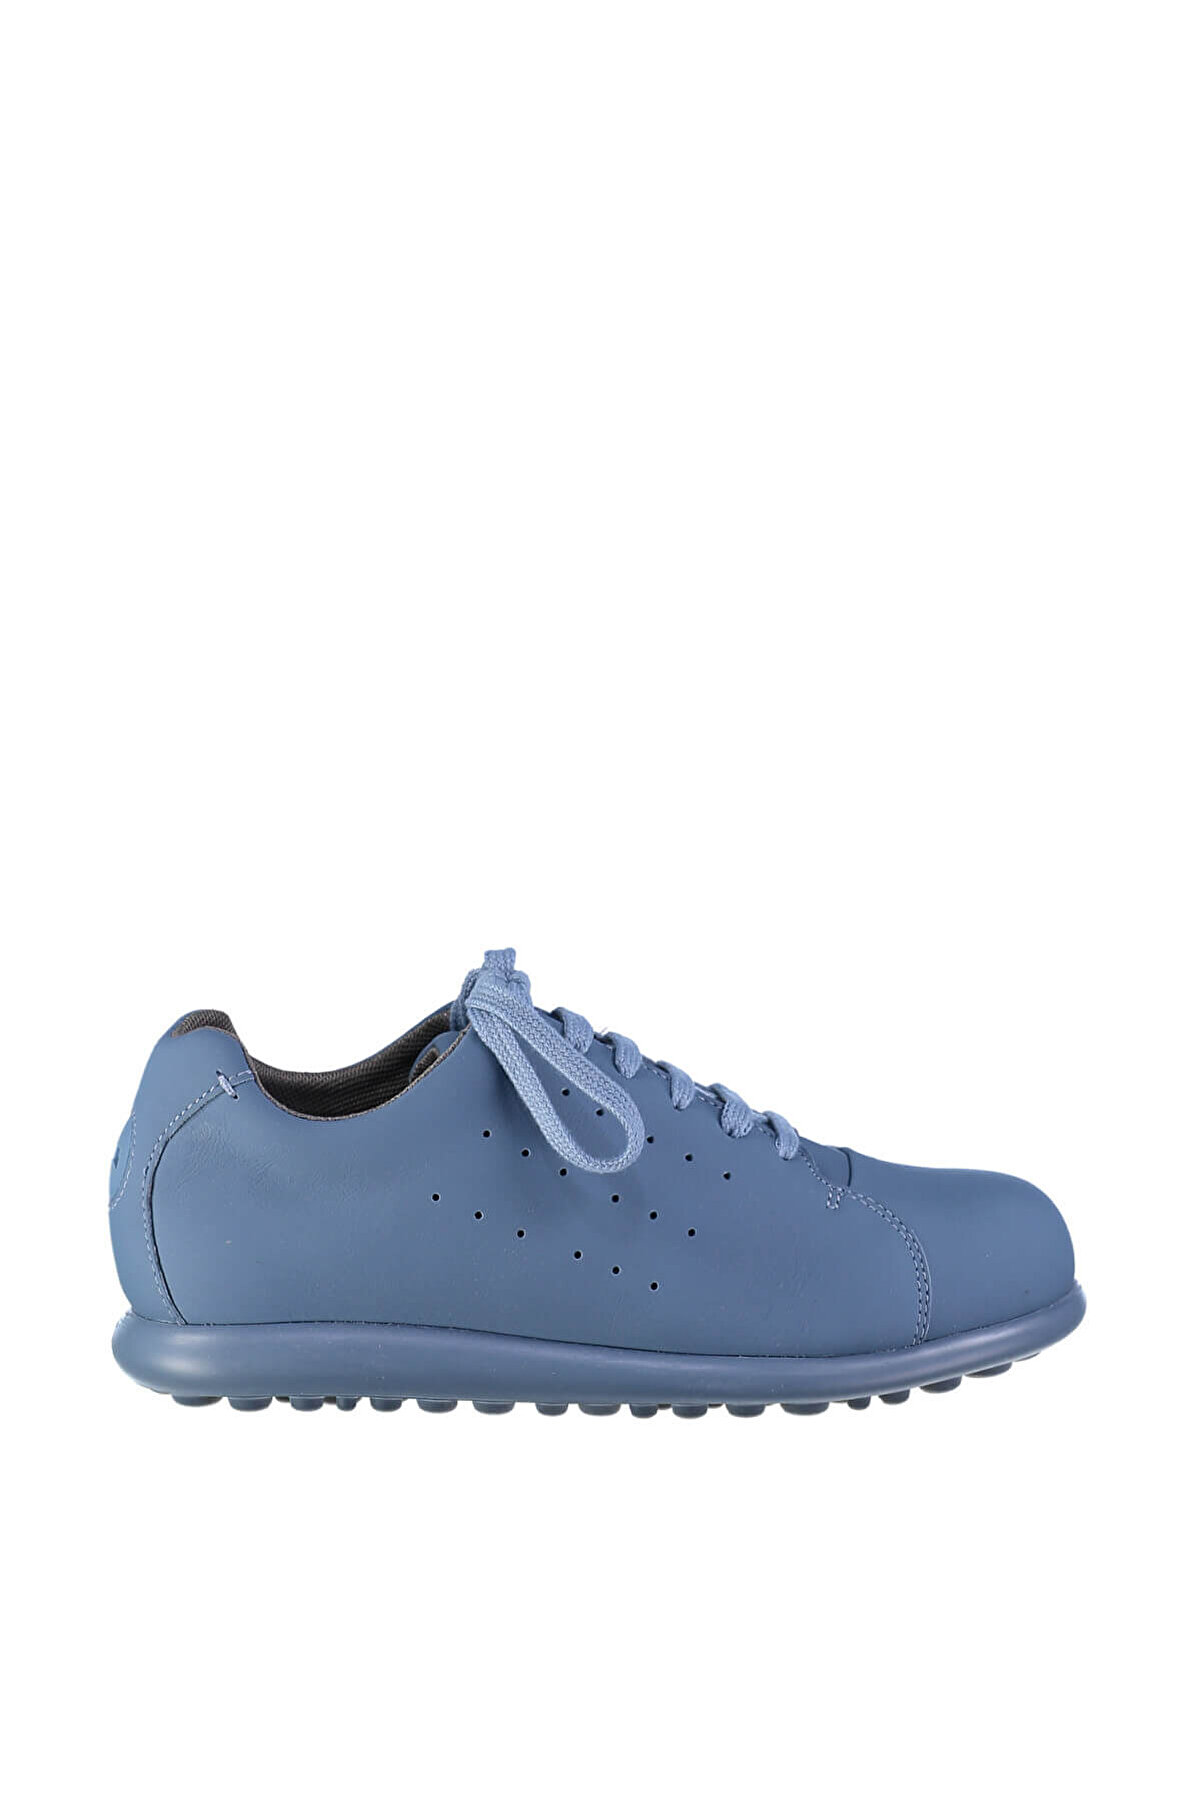 CAMPER Mavi Kadın Pelotas XL Casual Ayakkabı